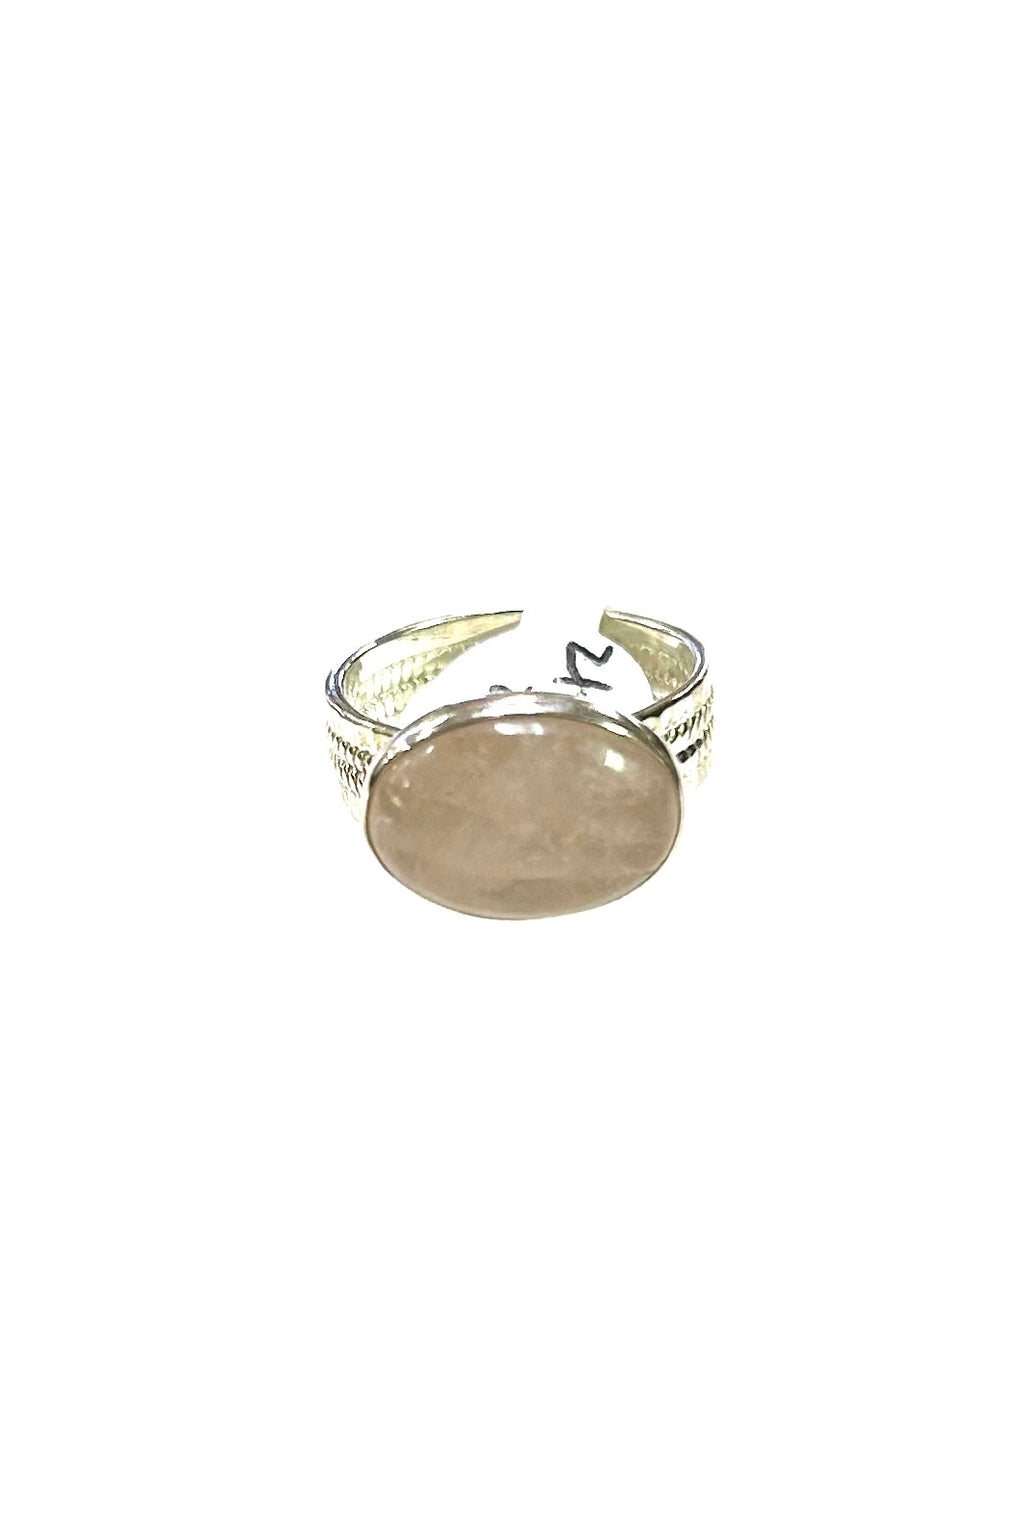 Rose Quartz Ring ($54) - Lighten Up Shop